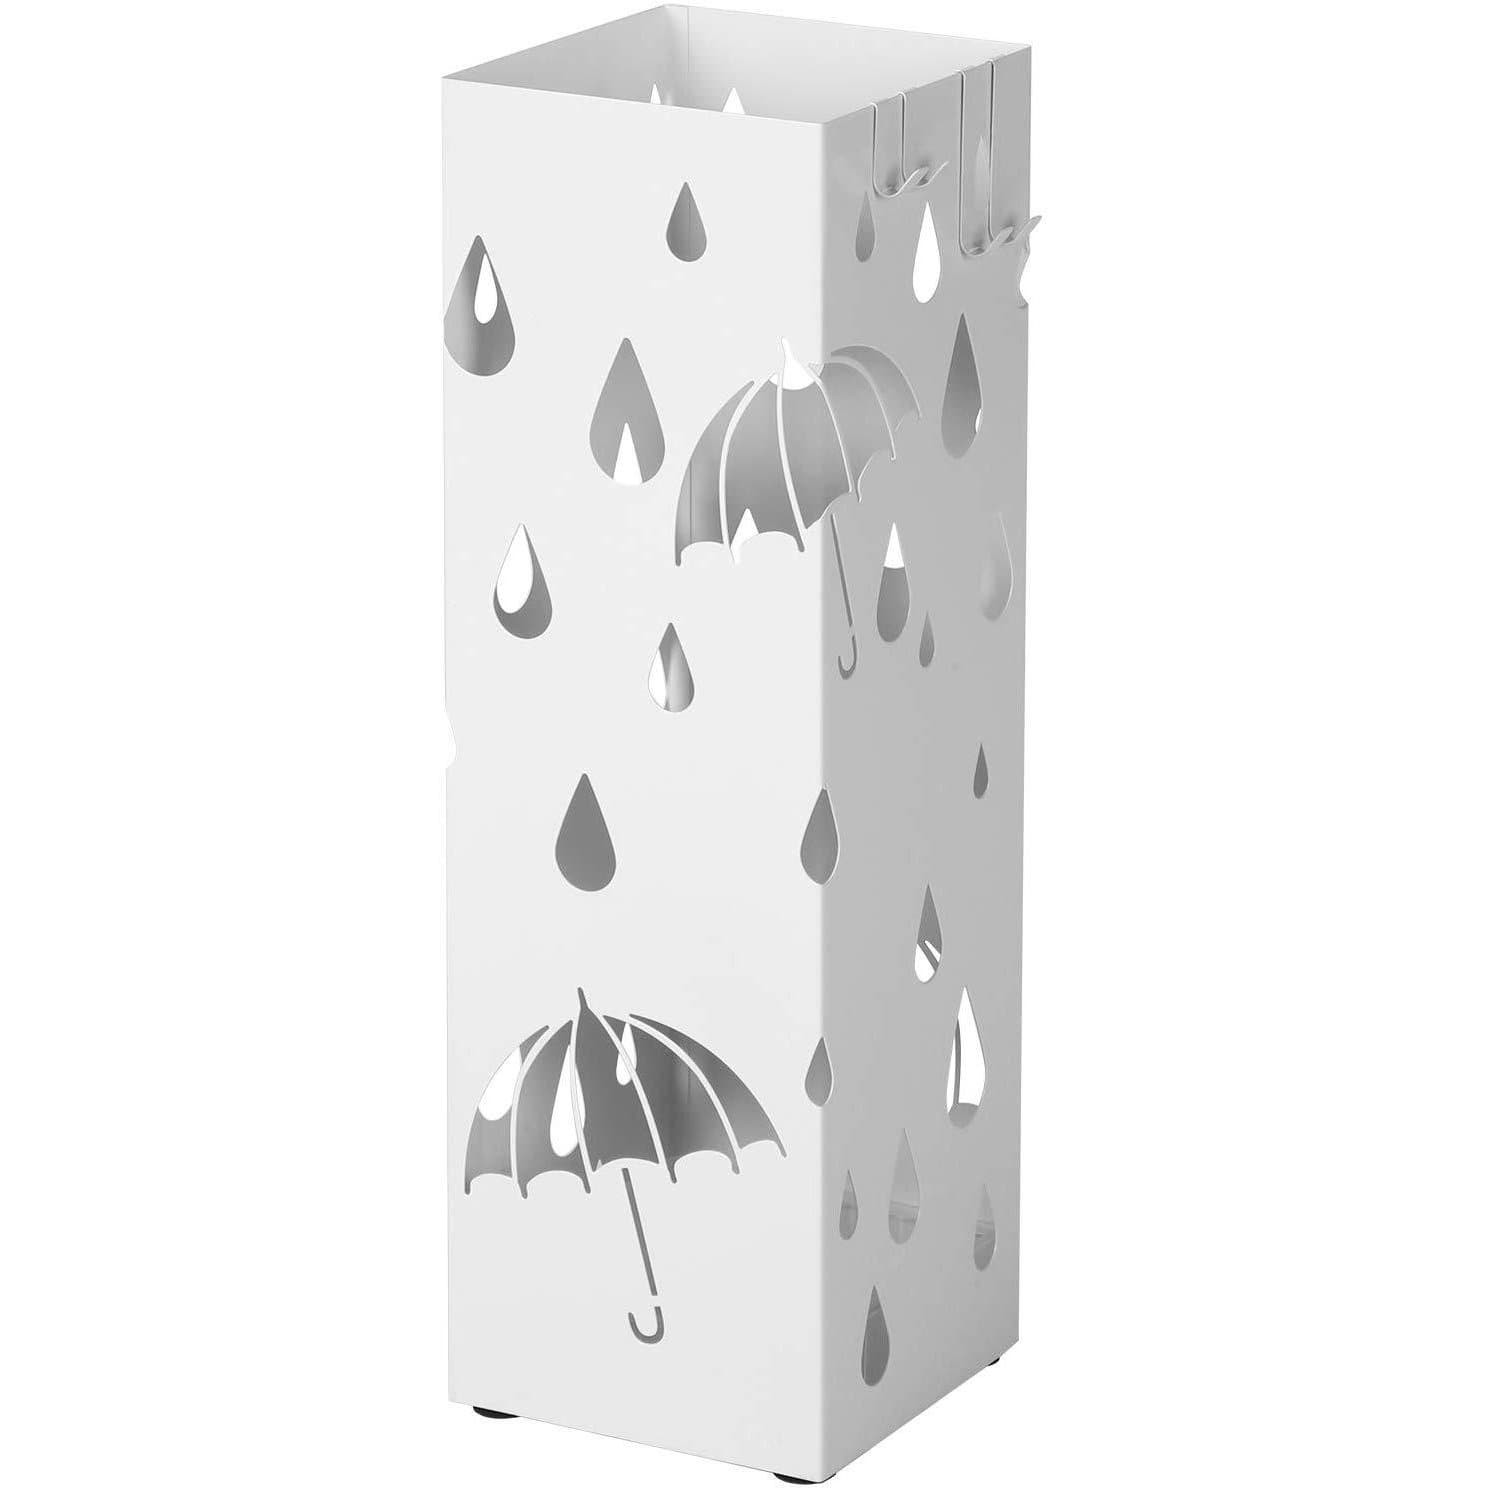 Nancy's Umbrella Stand White - Metal Umbrella Stand with Rain Motif 49 CM High